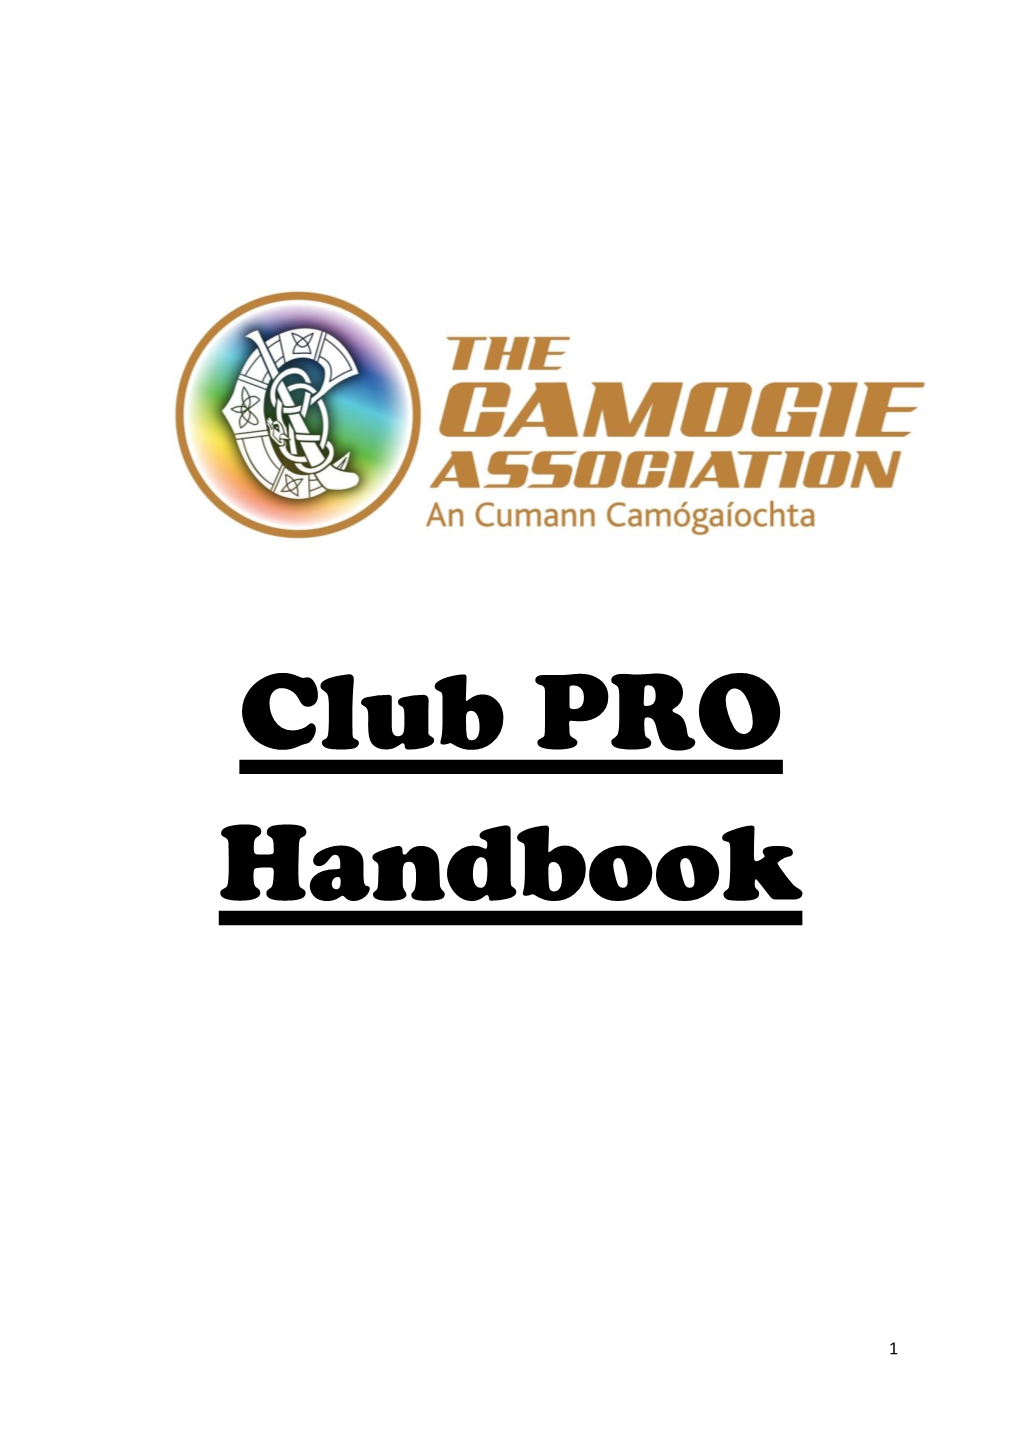 Club PRO Handbook